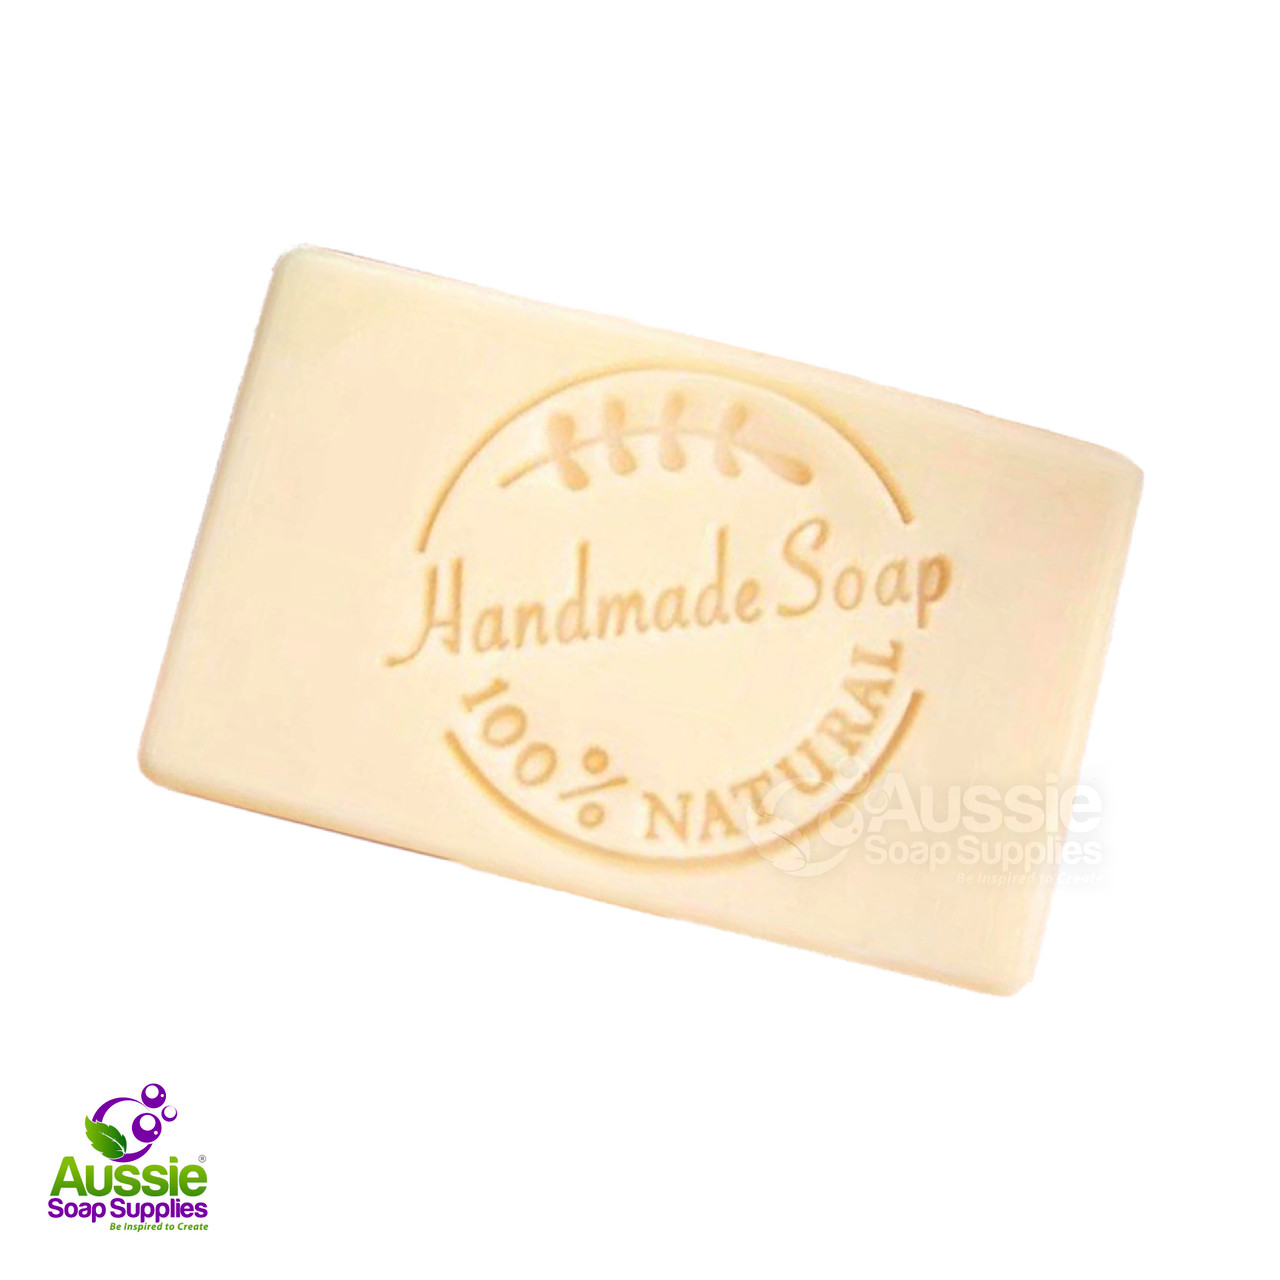 Natural Soap Stamp 